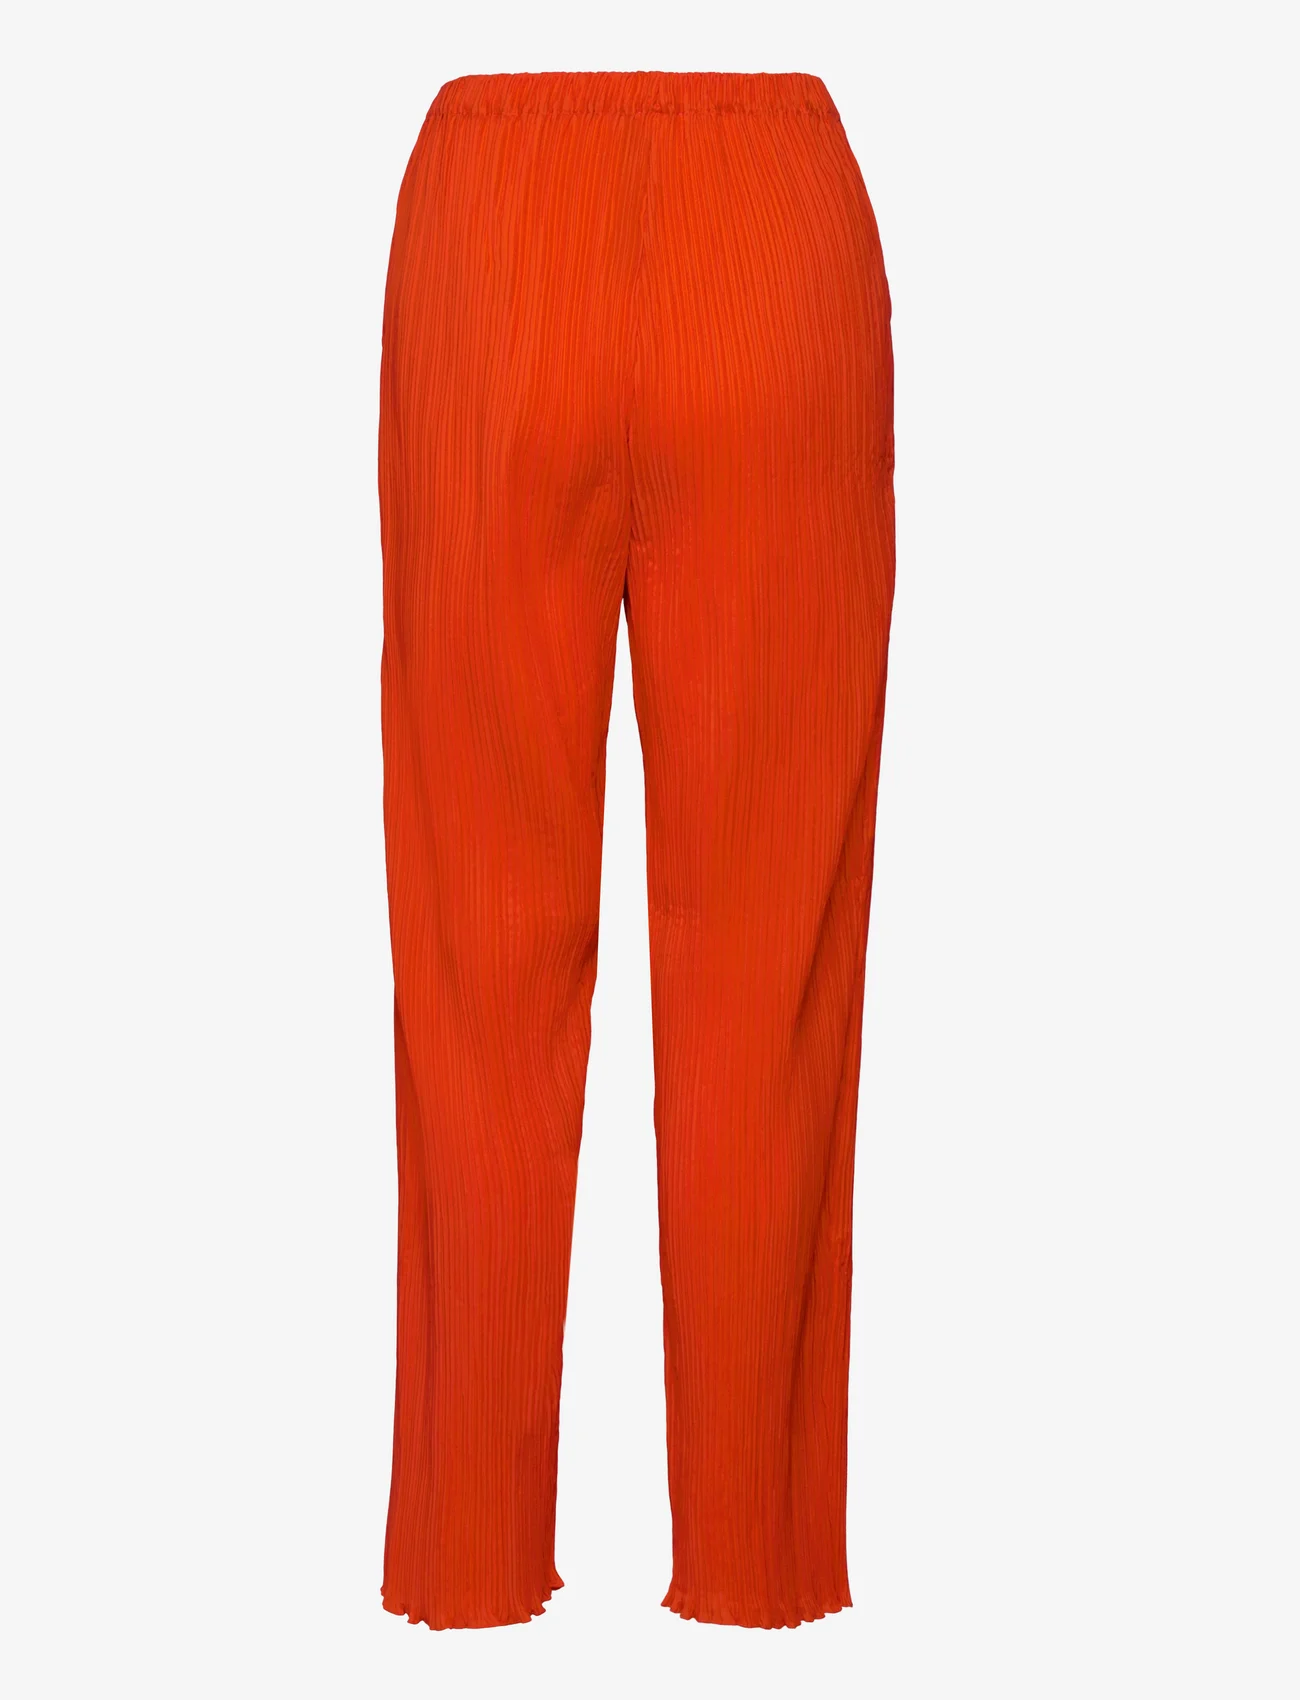 Samsøe Samsøe - Fridah trousers 14643 - spodnie proste - orange.com - 1